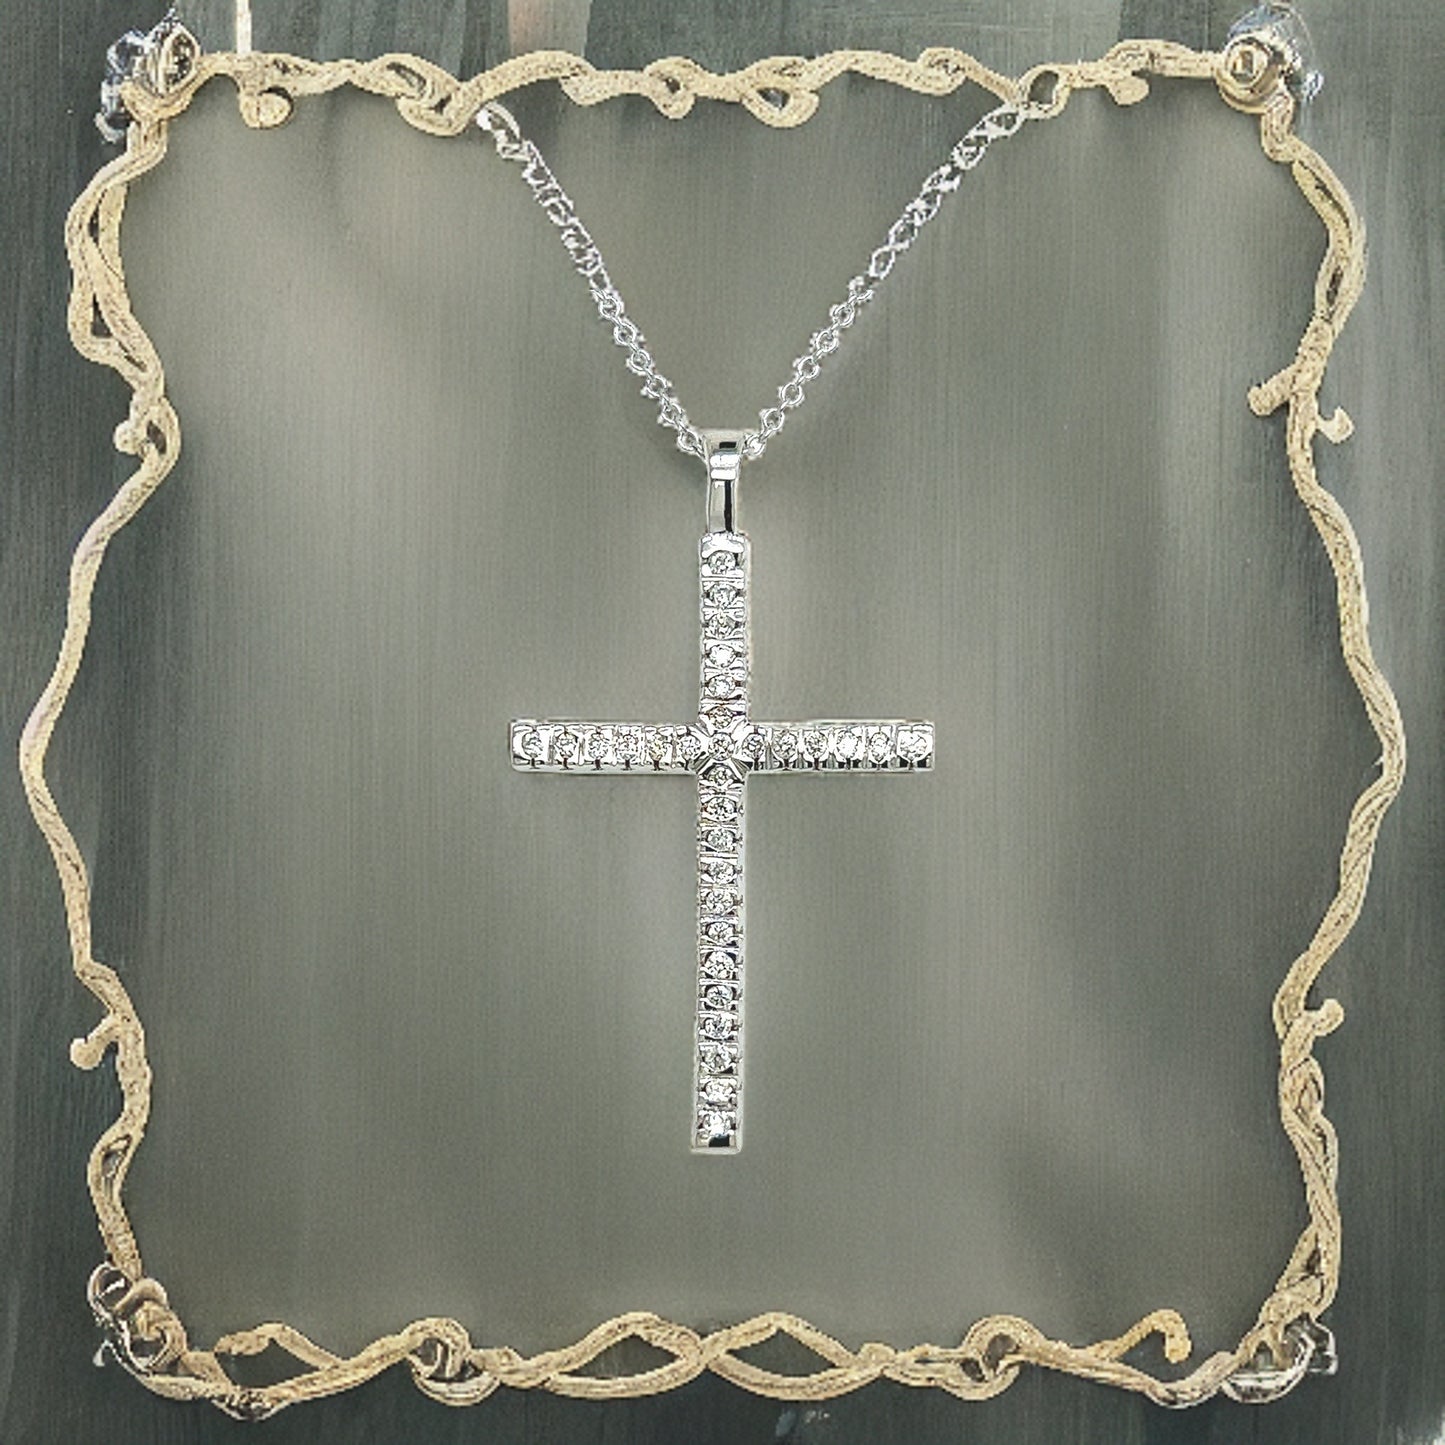 Natural Diamond Cross Pendant 17" Chain 14k White Gold 0.41 TCW Certified $3,490 307921 - Certified Fine Jewelry